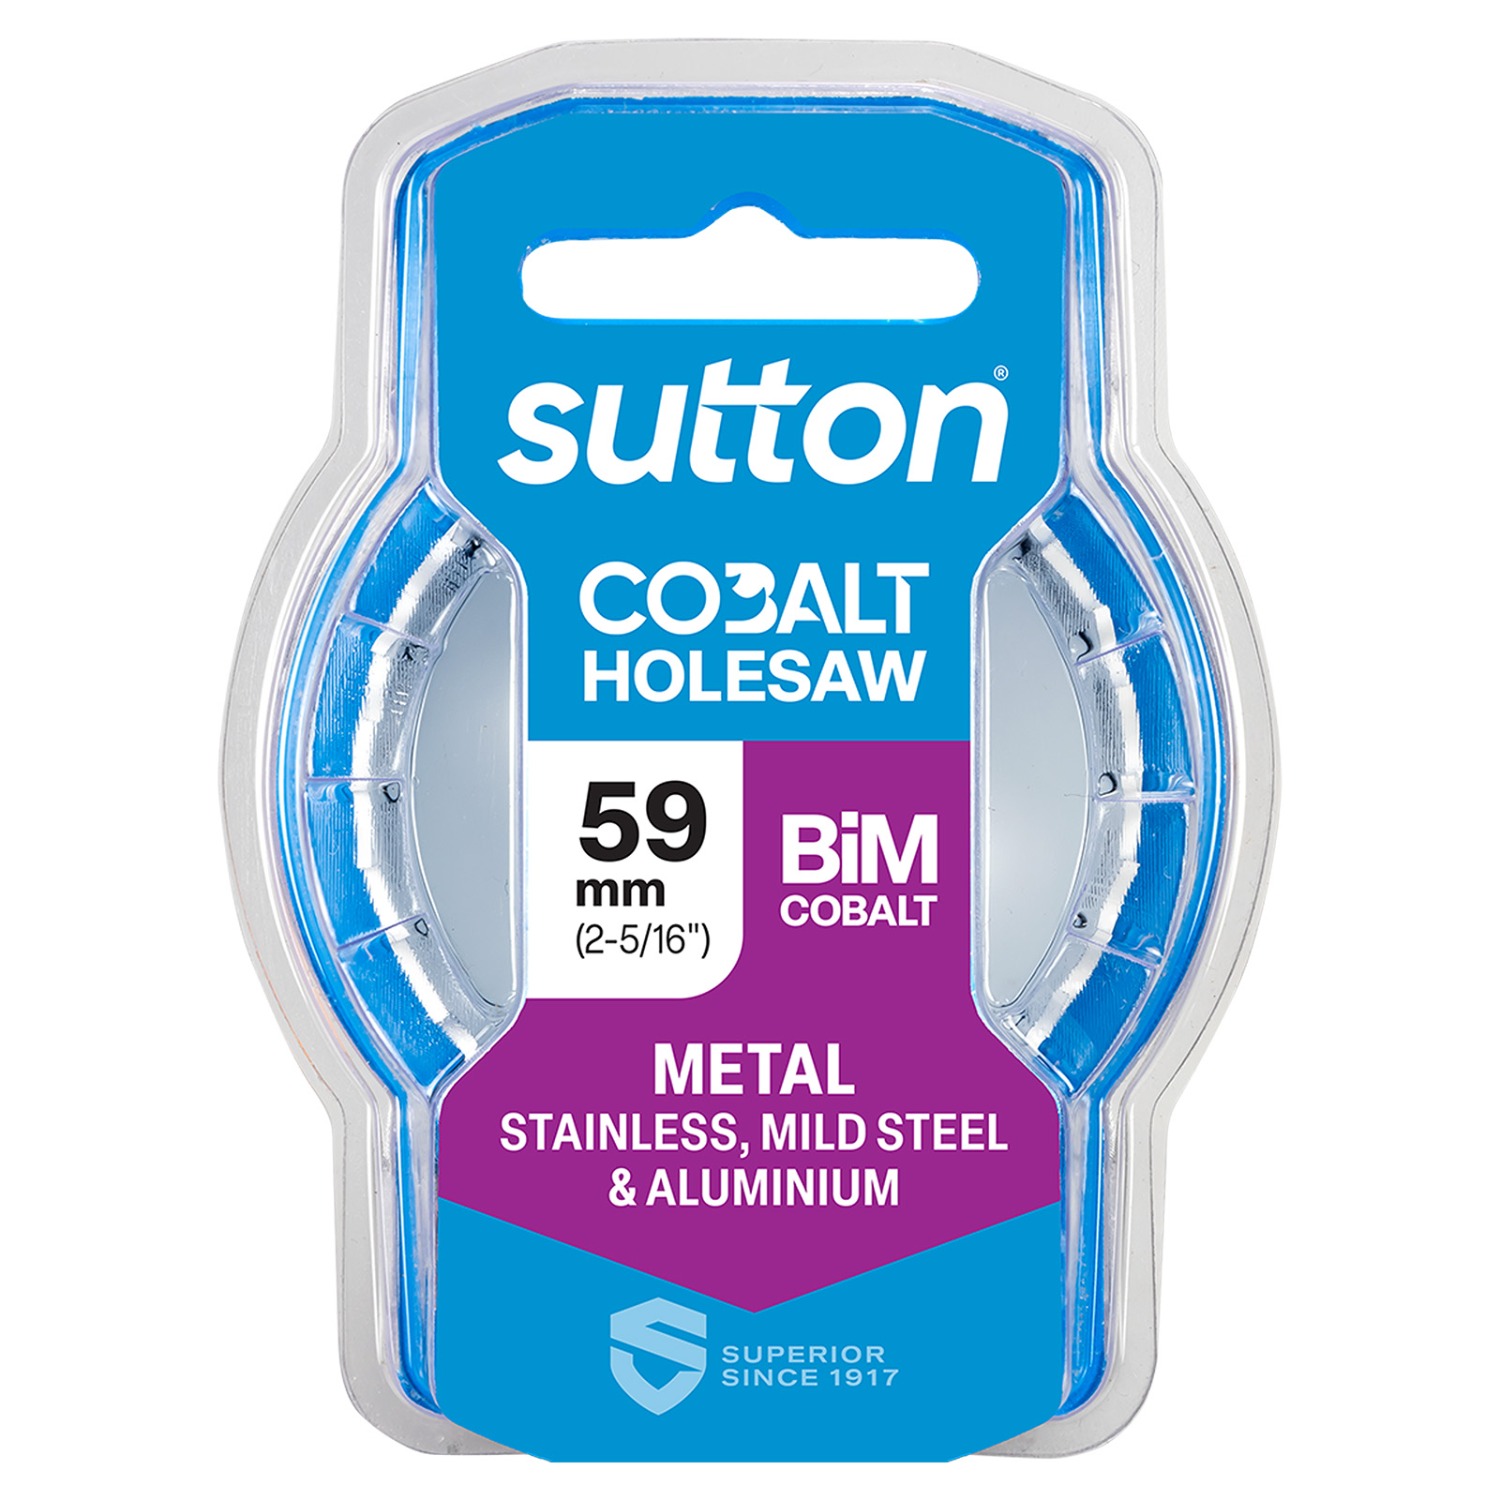 Bi-Metal Holesaw - Cobalt | Sutton New Zealand